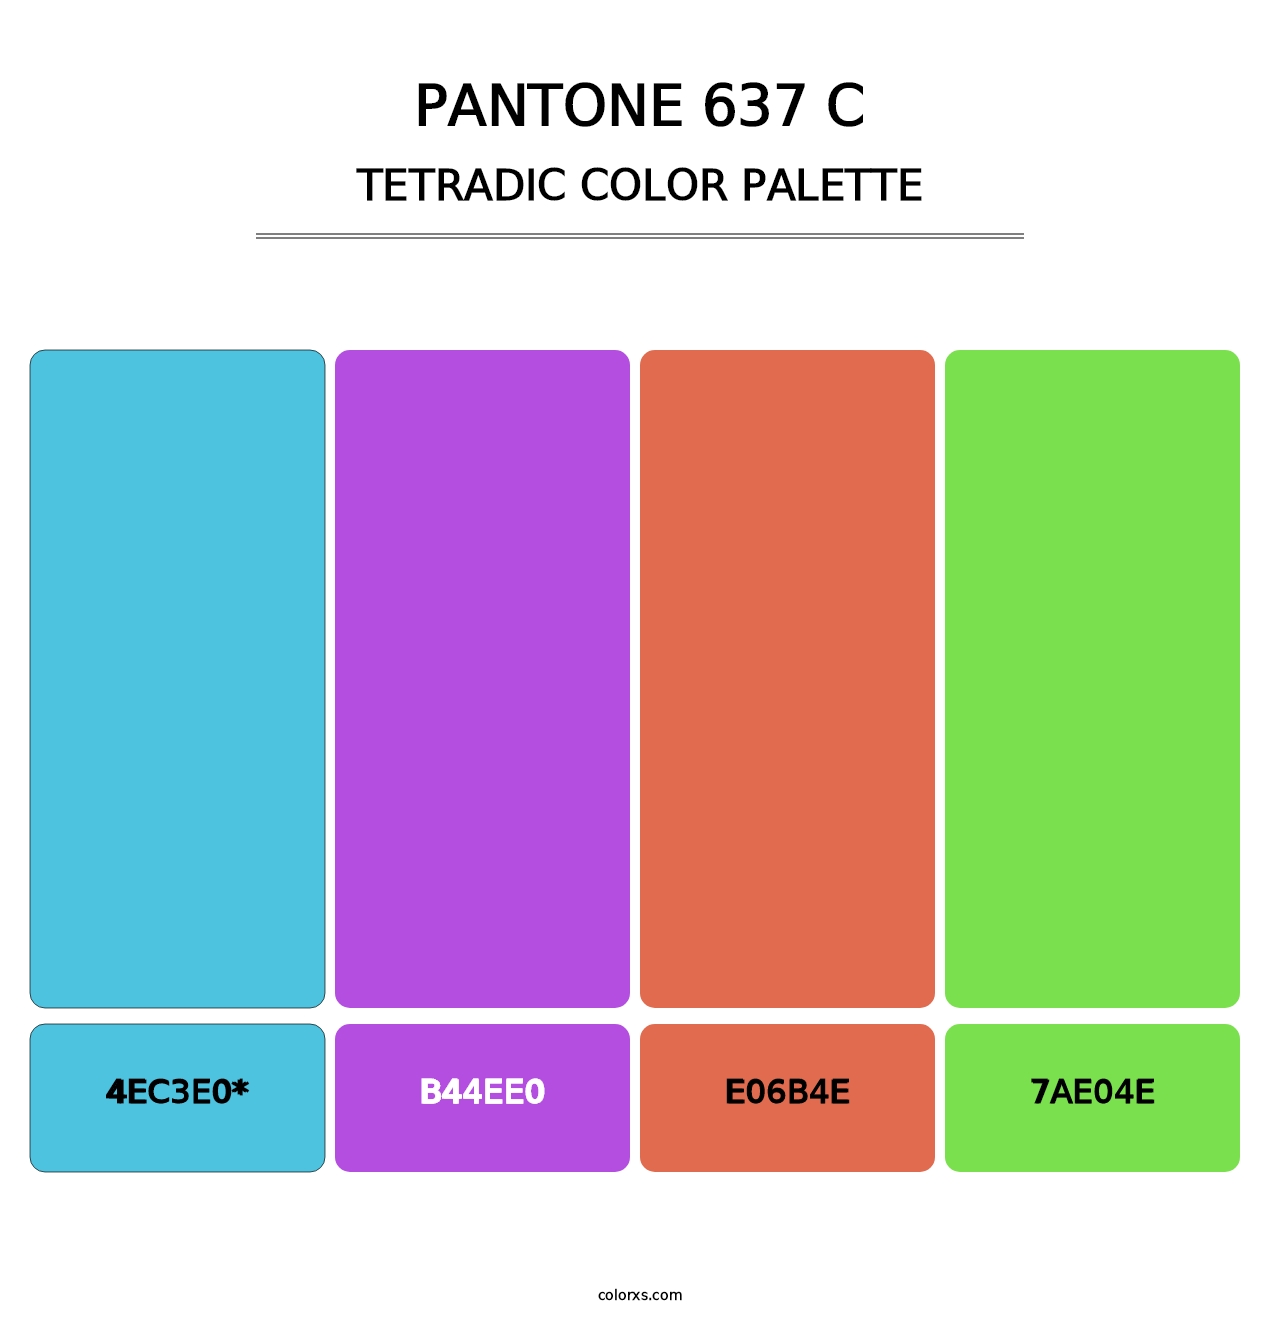 PANTONE 637 C - Tetradic Color Palette